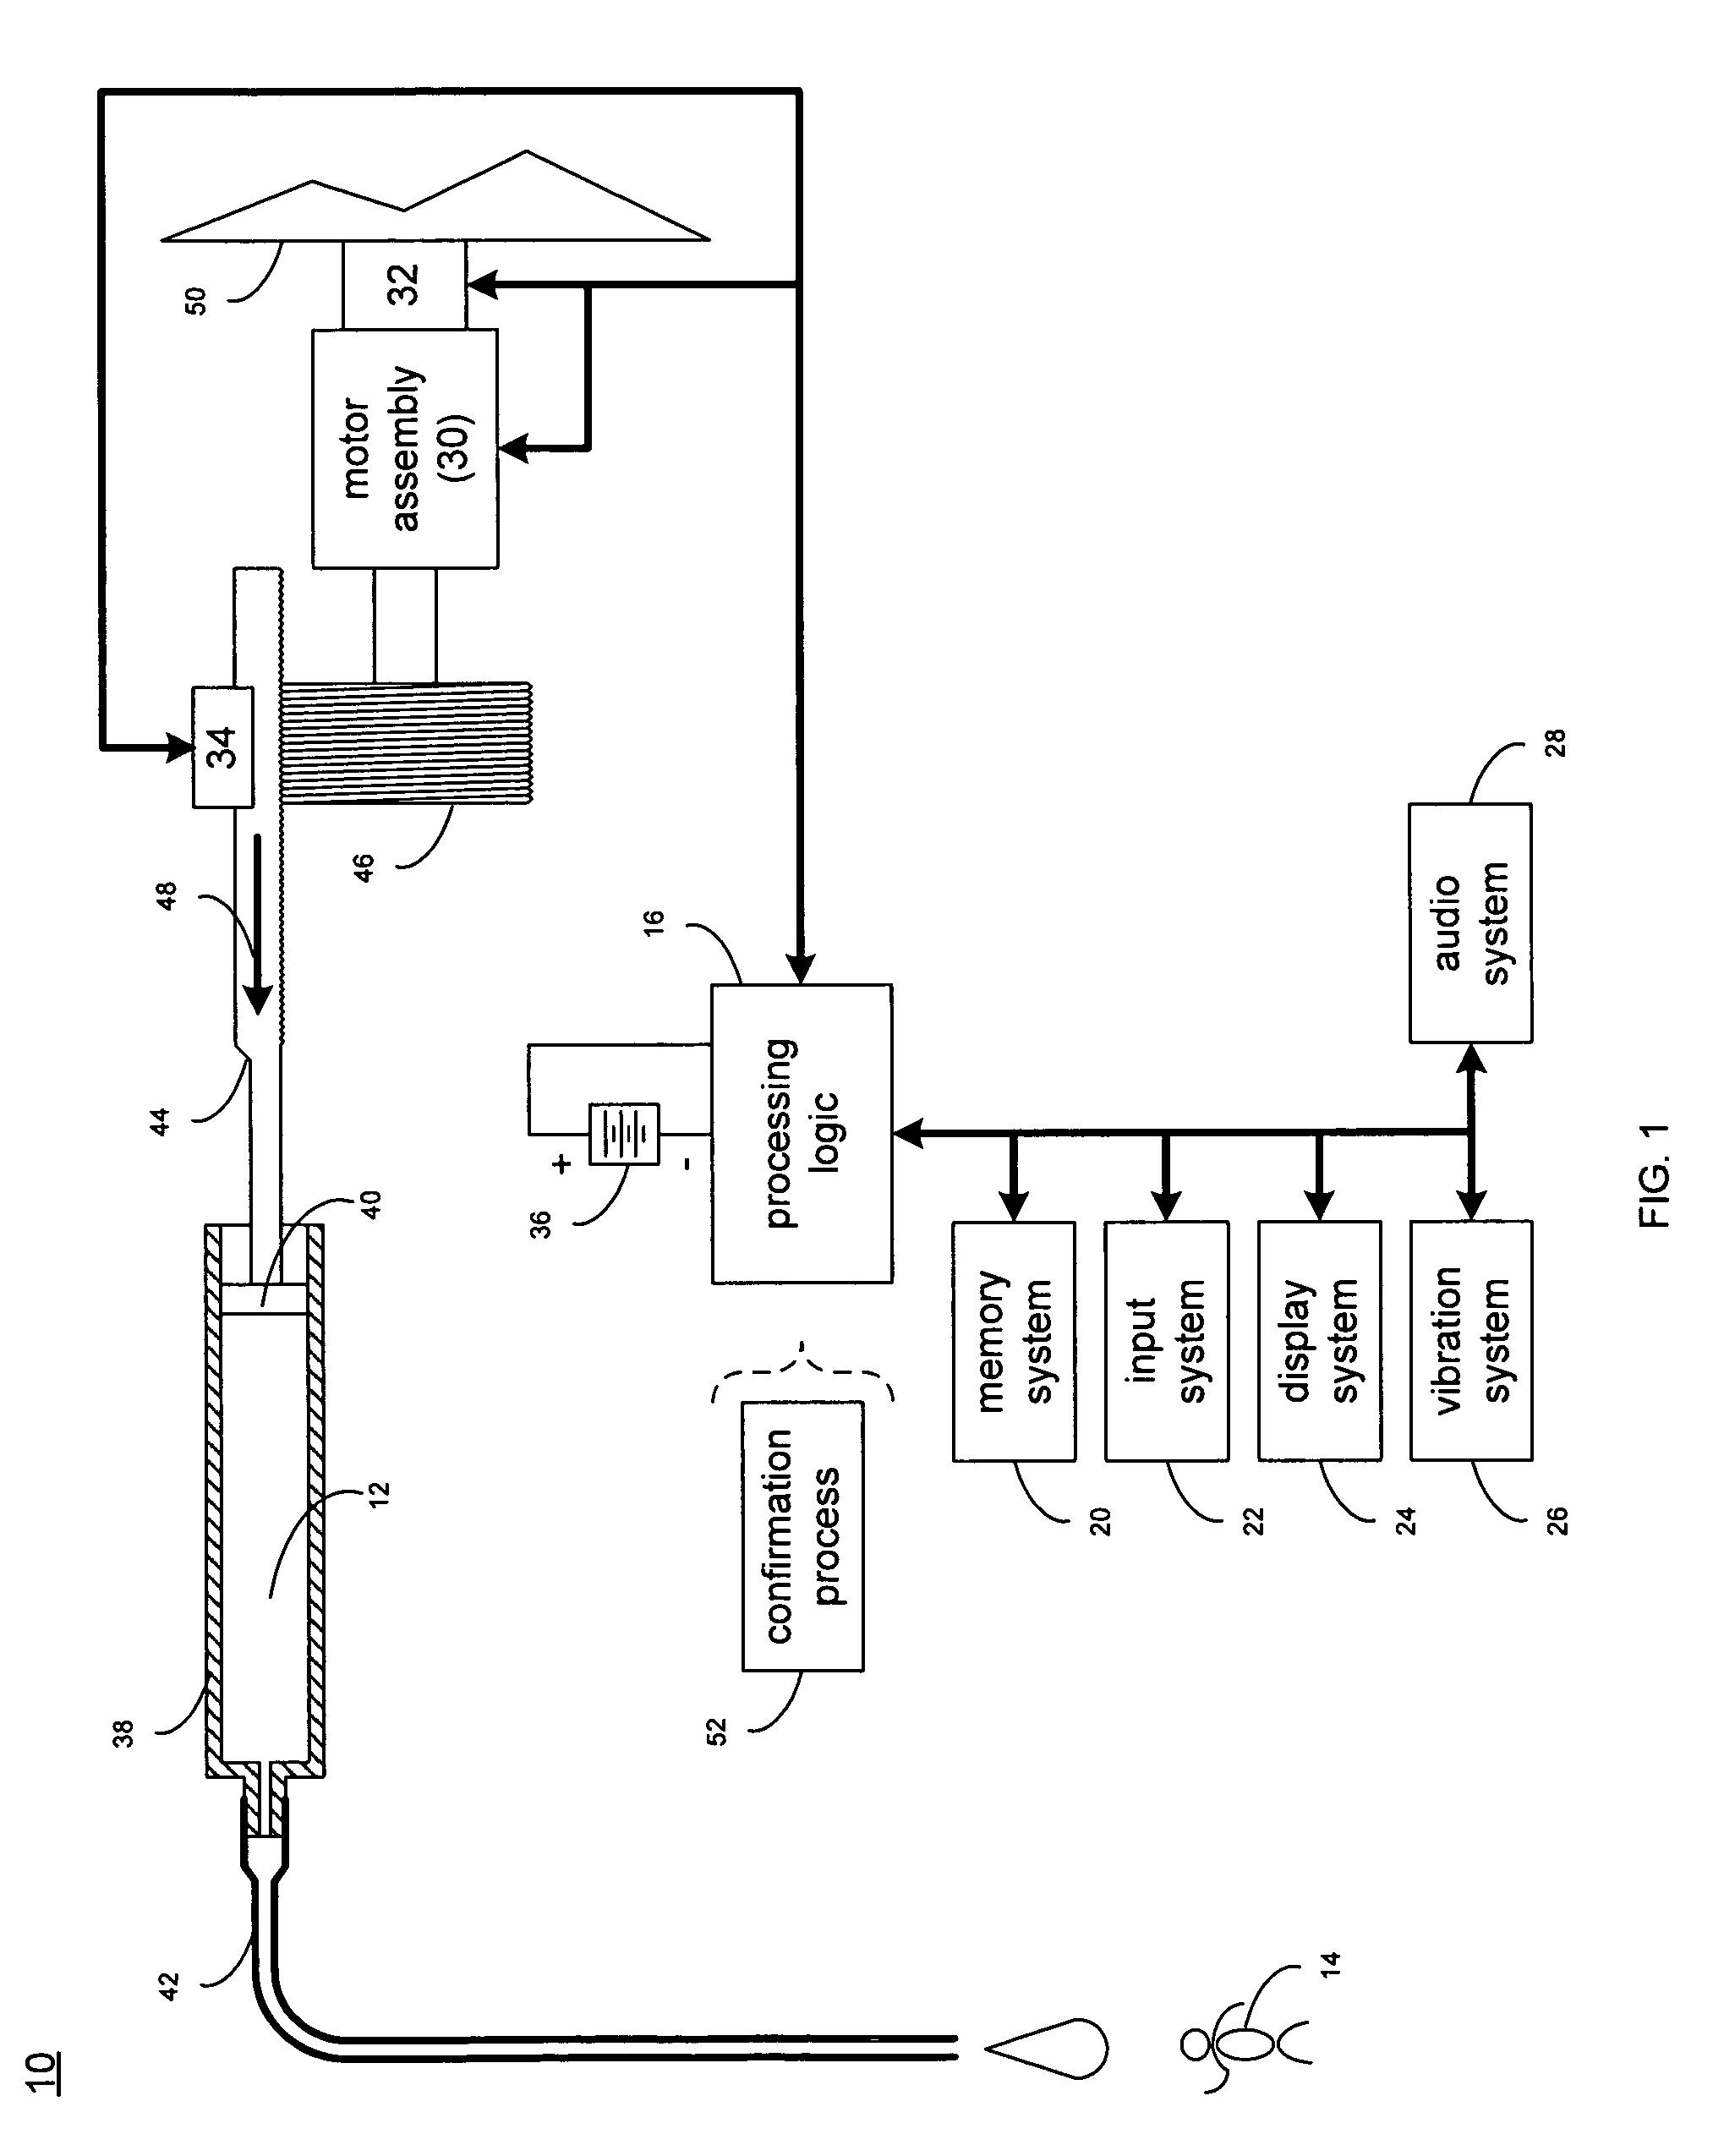 Multi-language / multi-processor infusion pump assembly